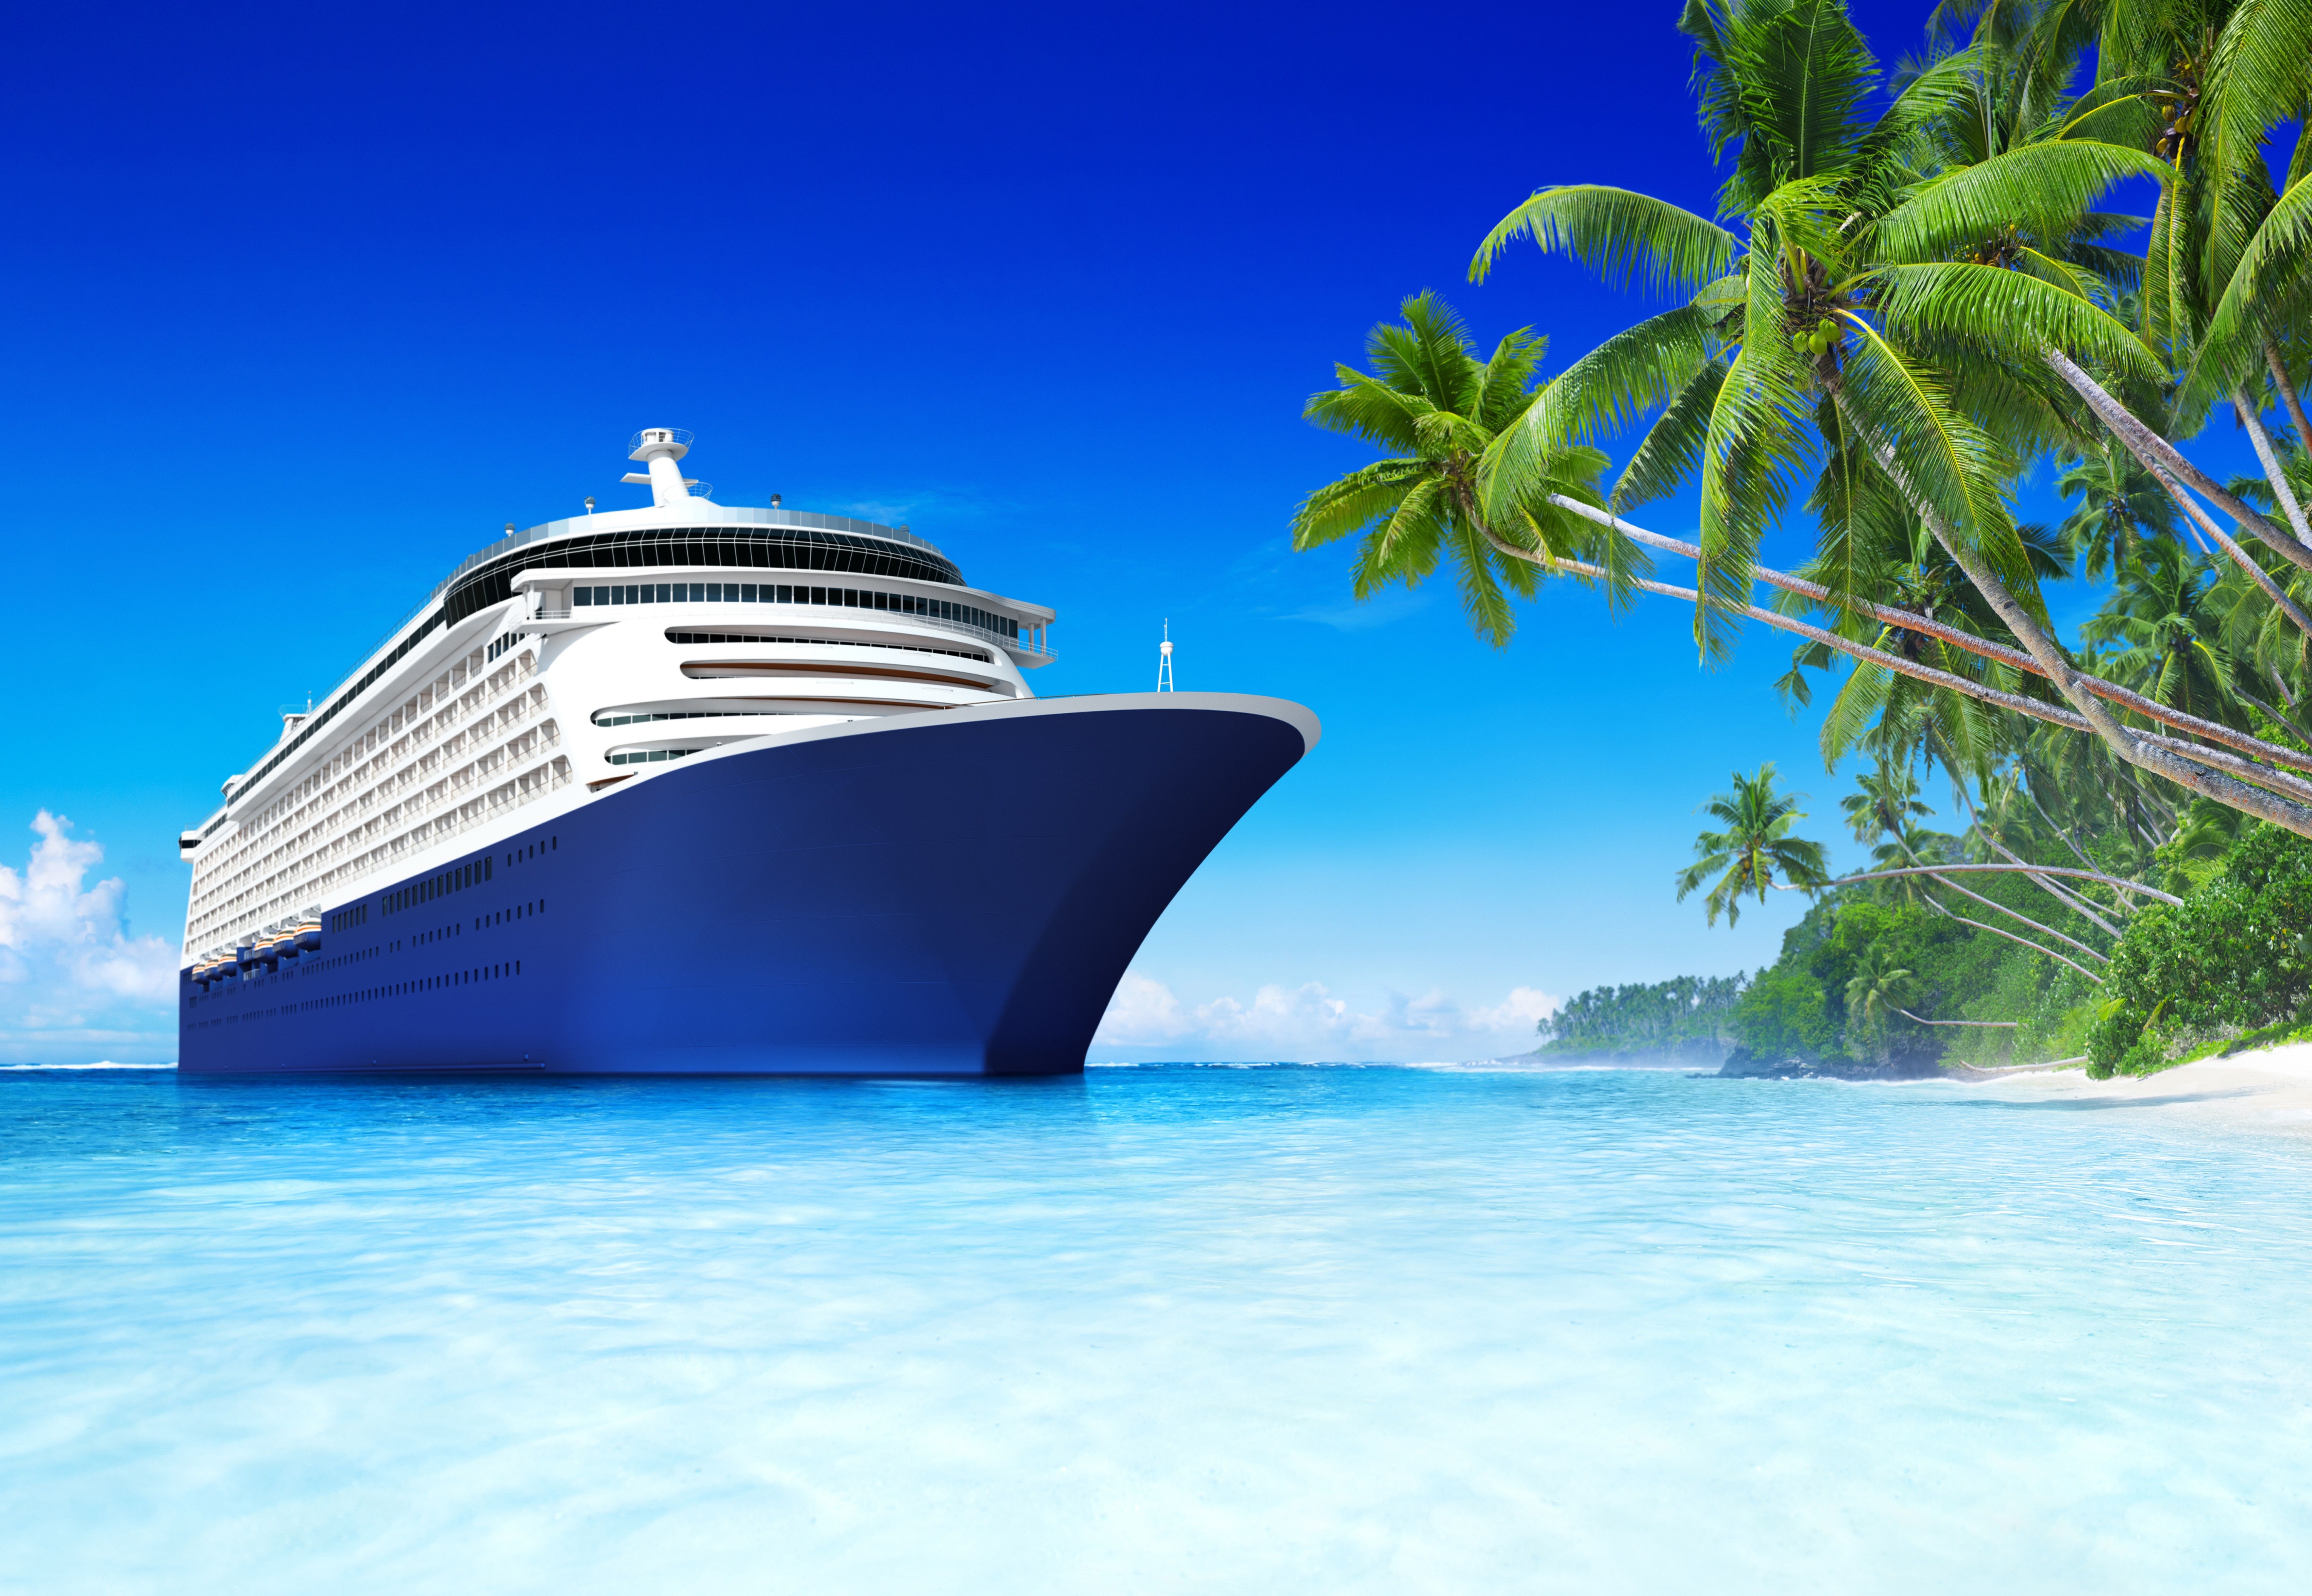 Desktop Wallpaper Cruise Ship Vehicles Sea 4k Hd Image Picture  Background D73d45